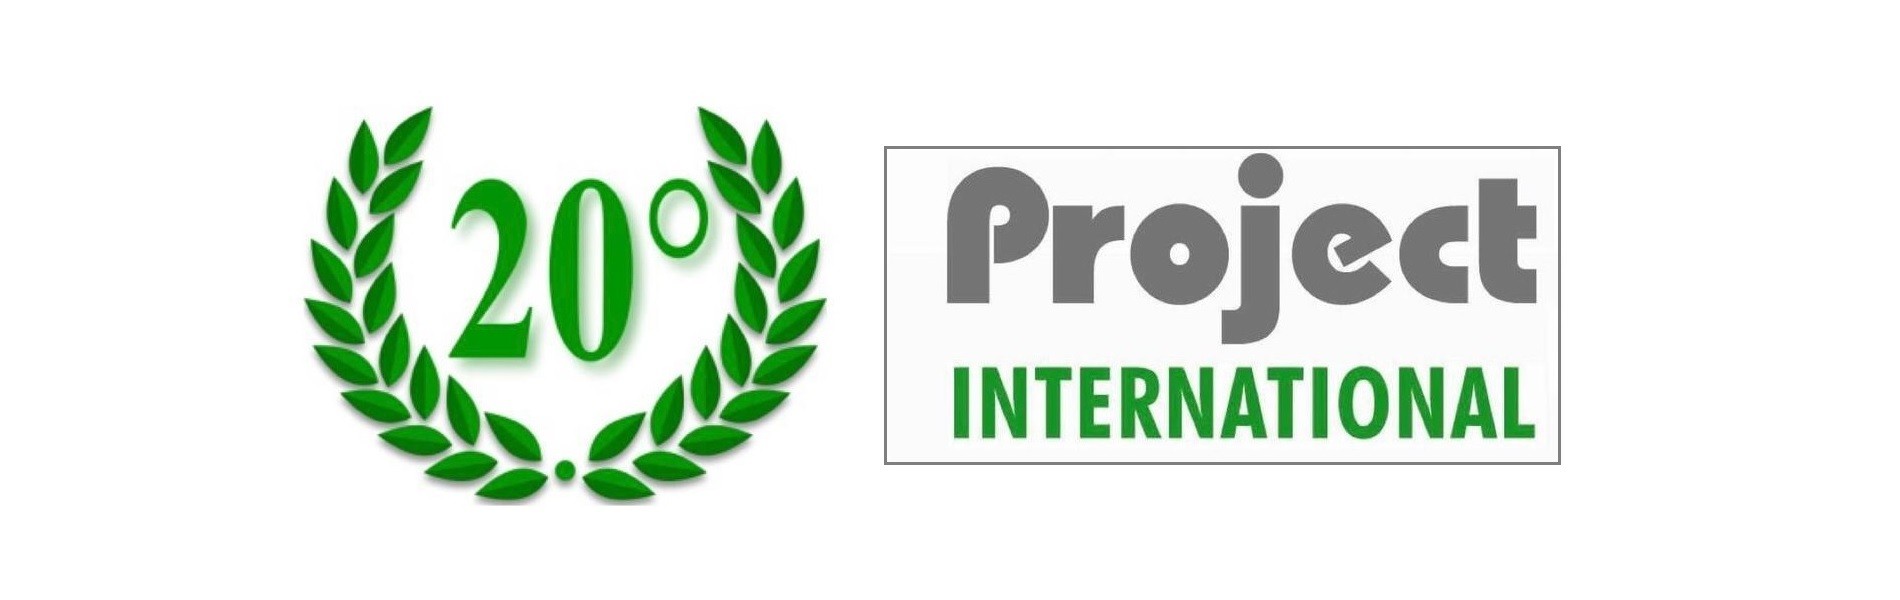 20 anni di Project International